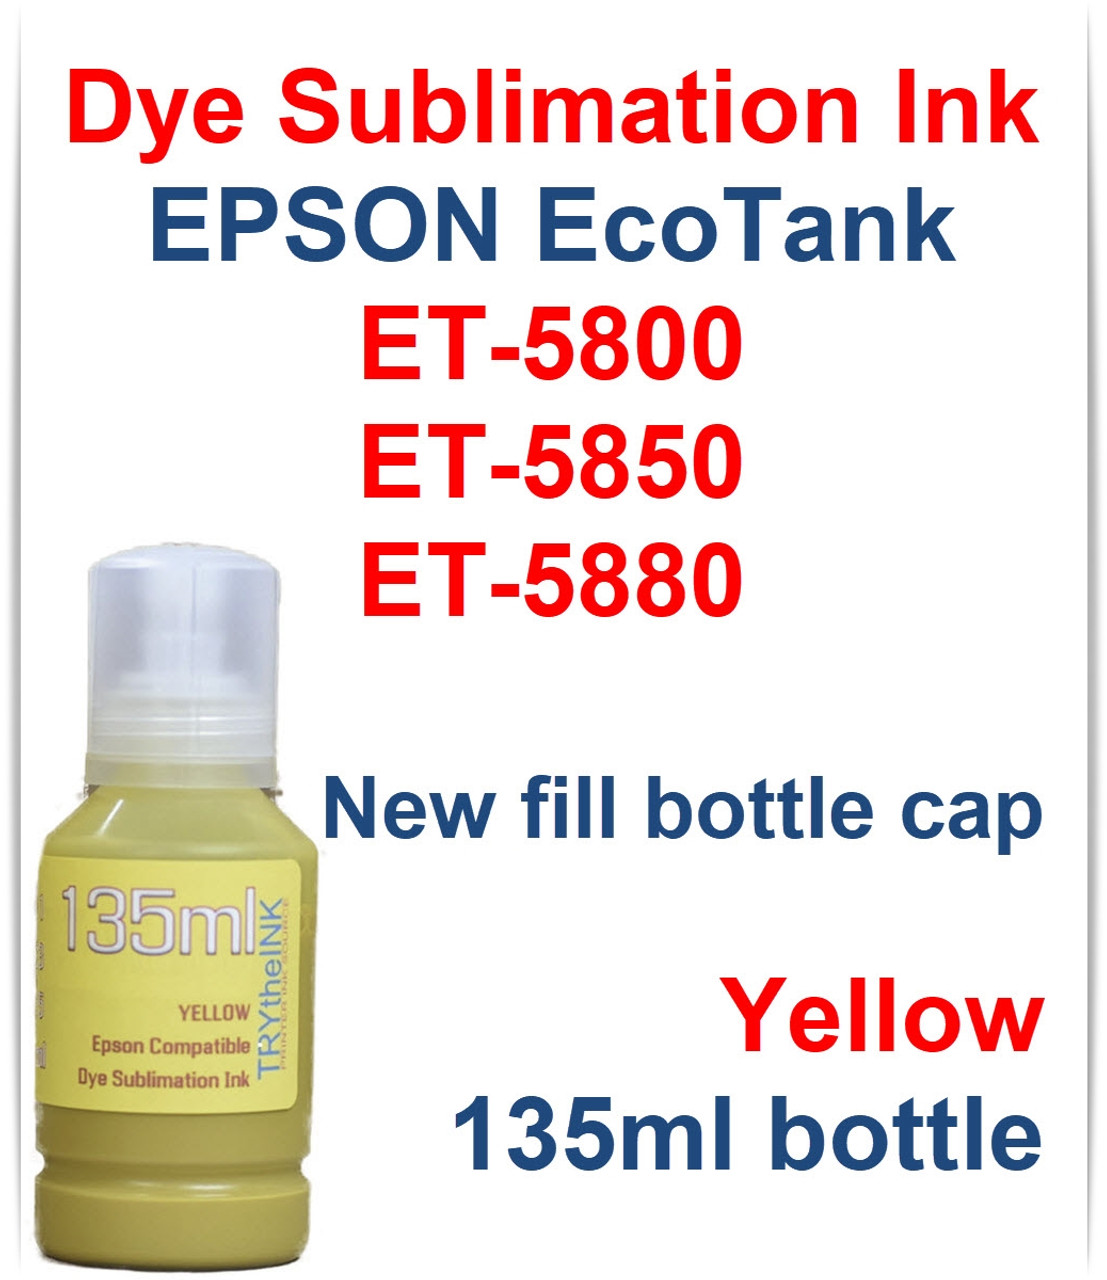 Yellow 135ml bottle Dye Sublimation Ink for EPSON EcoTank ET-5800 ET-5850 ET-5880 Printer